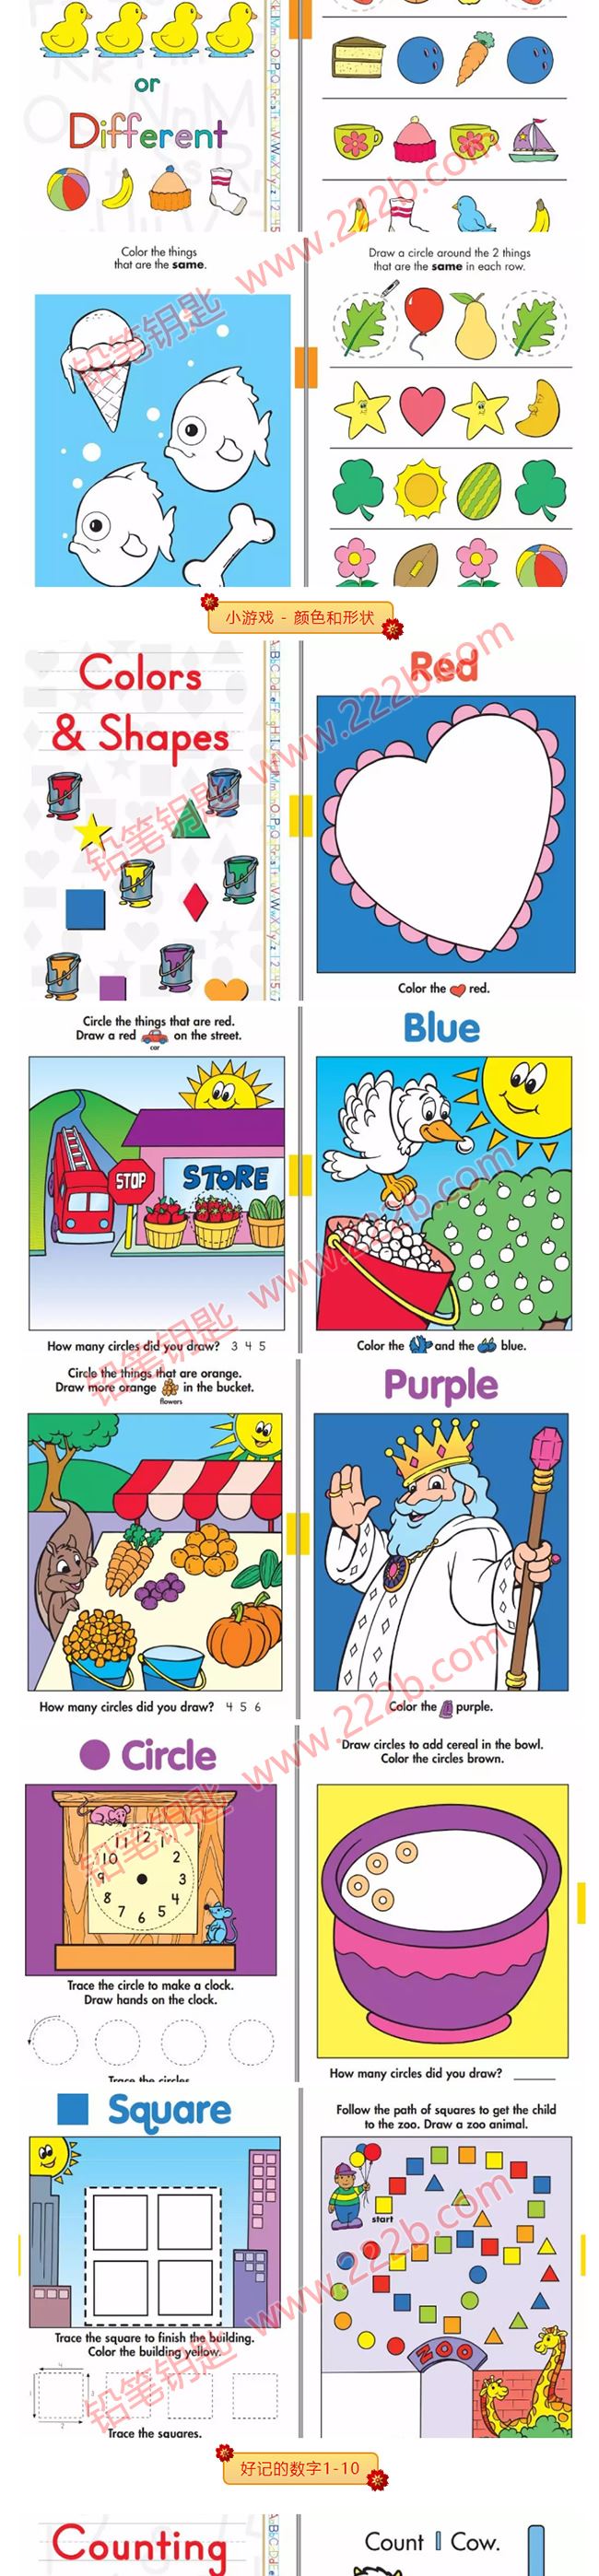 《My Preschool learning book》幼儿学前字母练习册 原生PDF近400页 百度云网盘下载